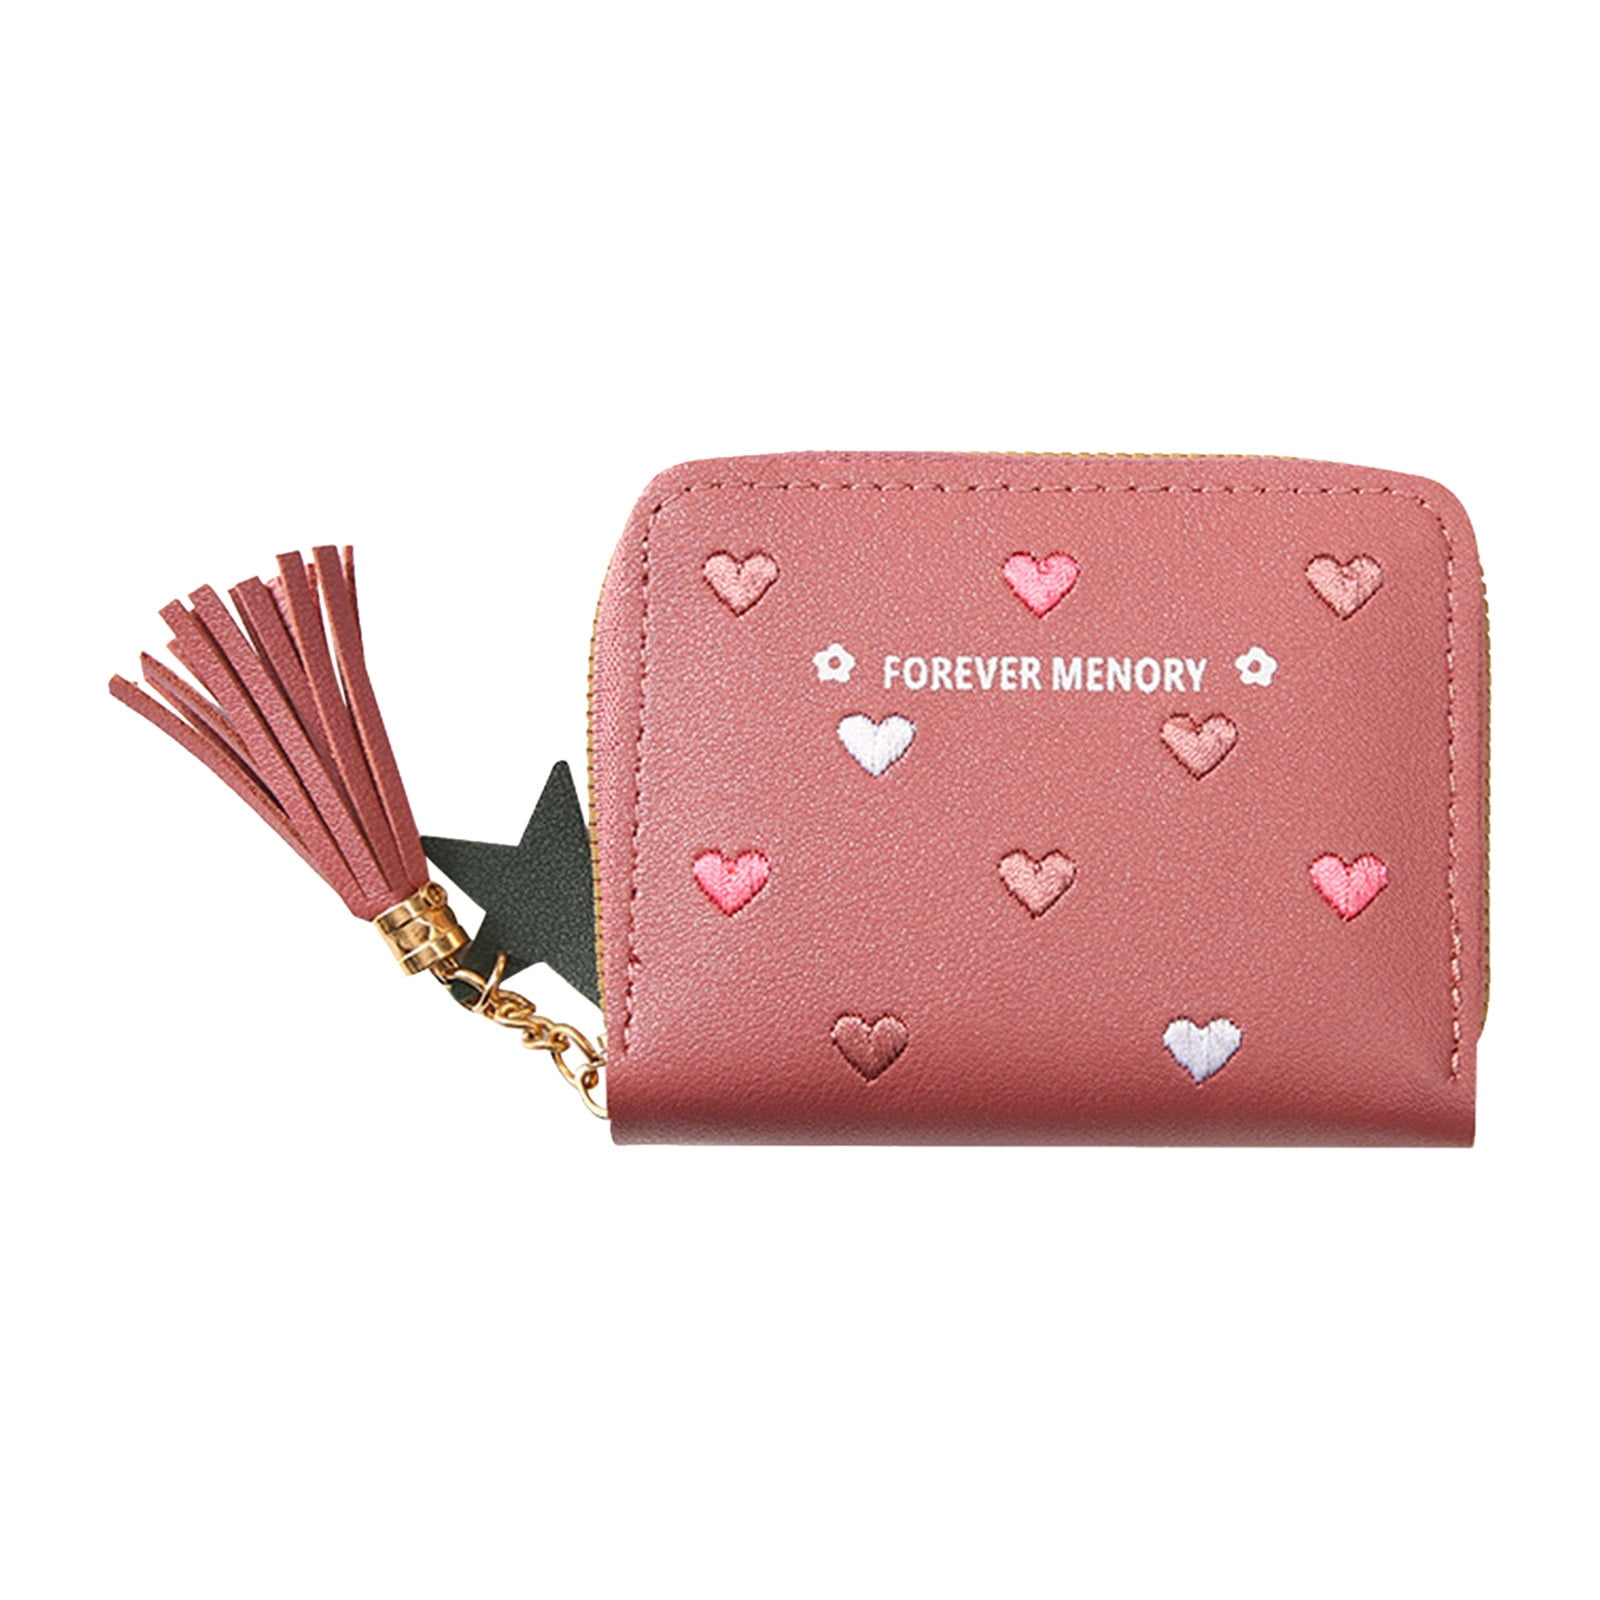 lv handbags for women clearance sale